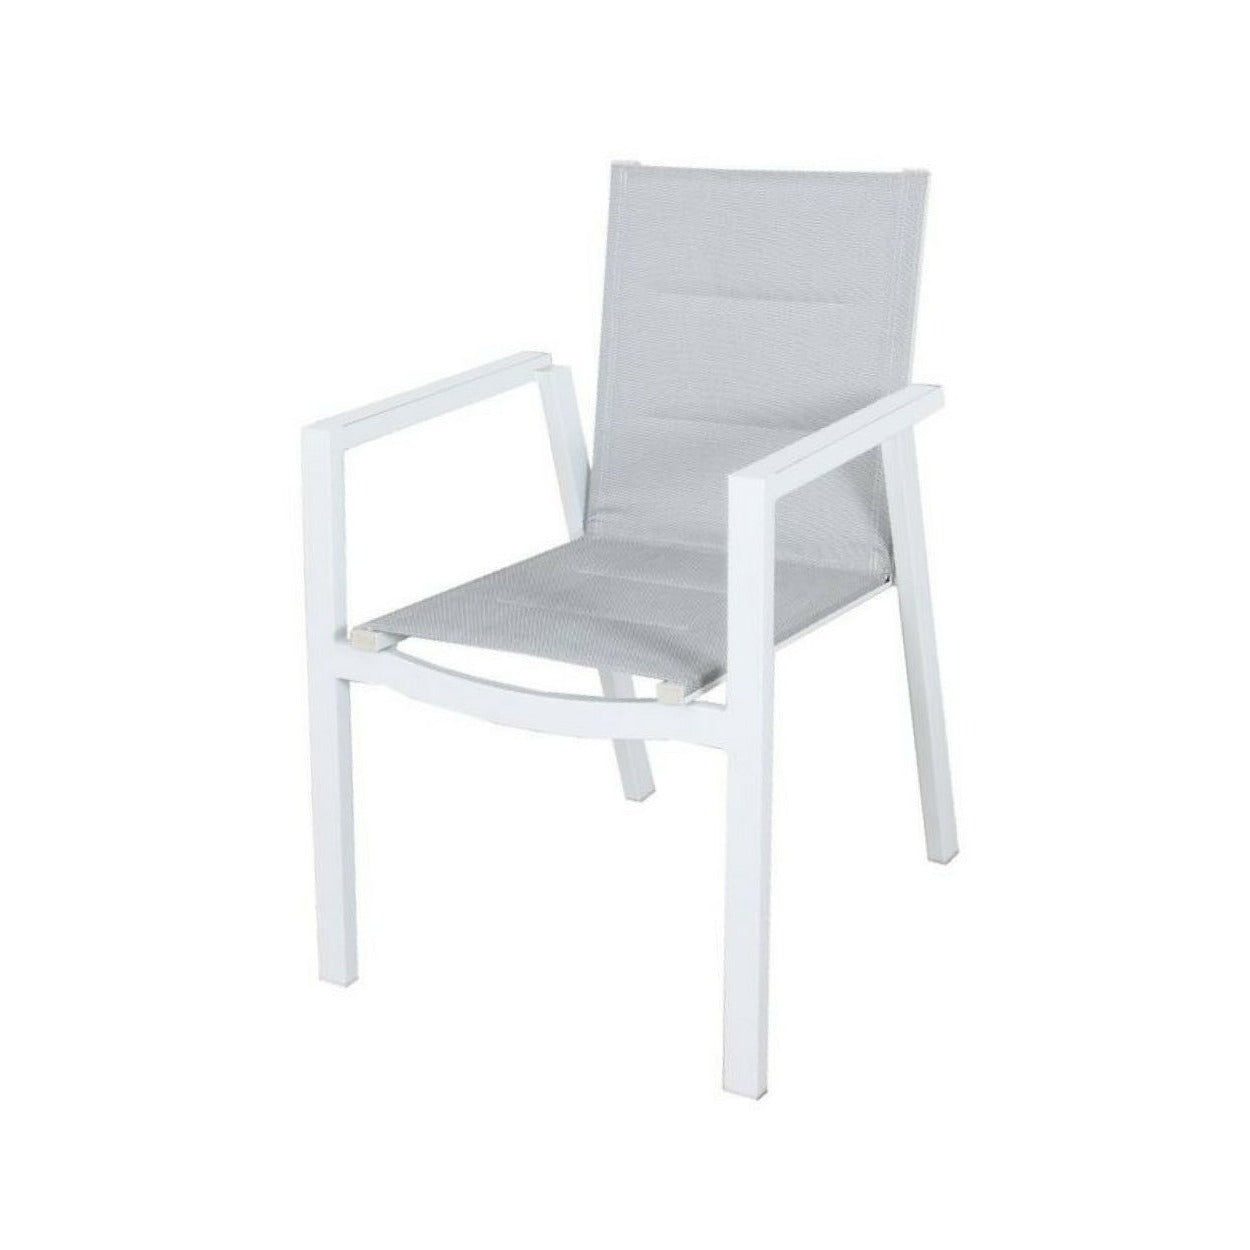 Mikado Outdoor Chair